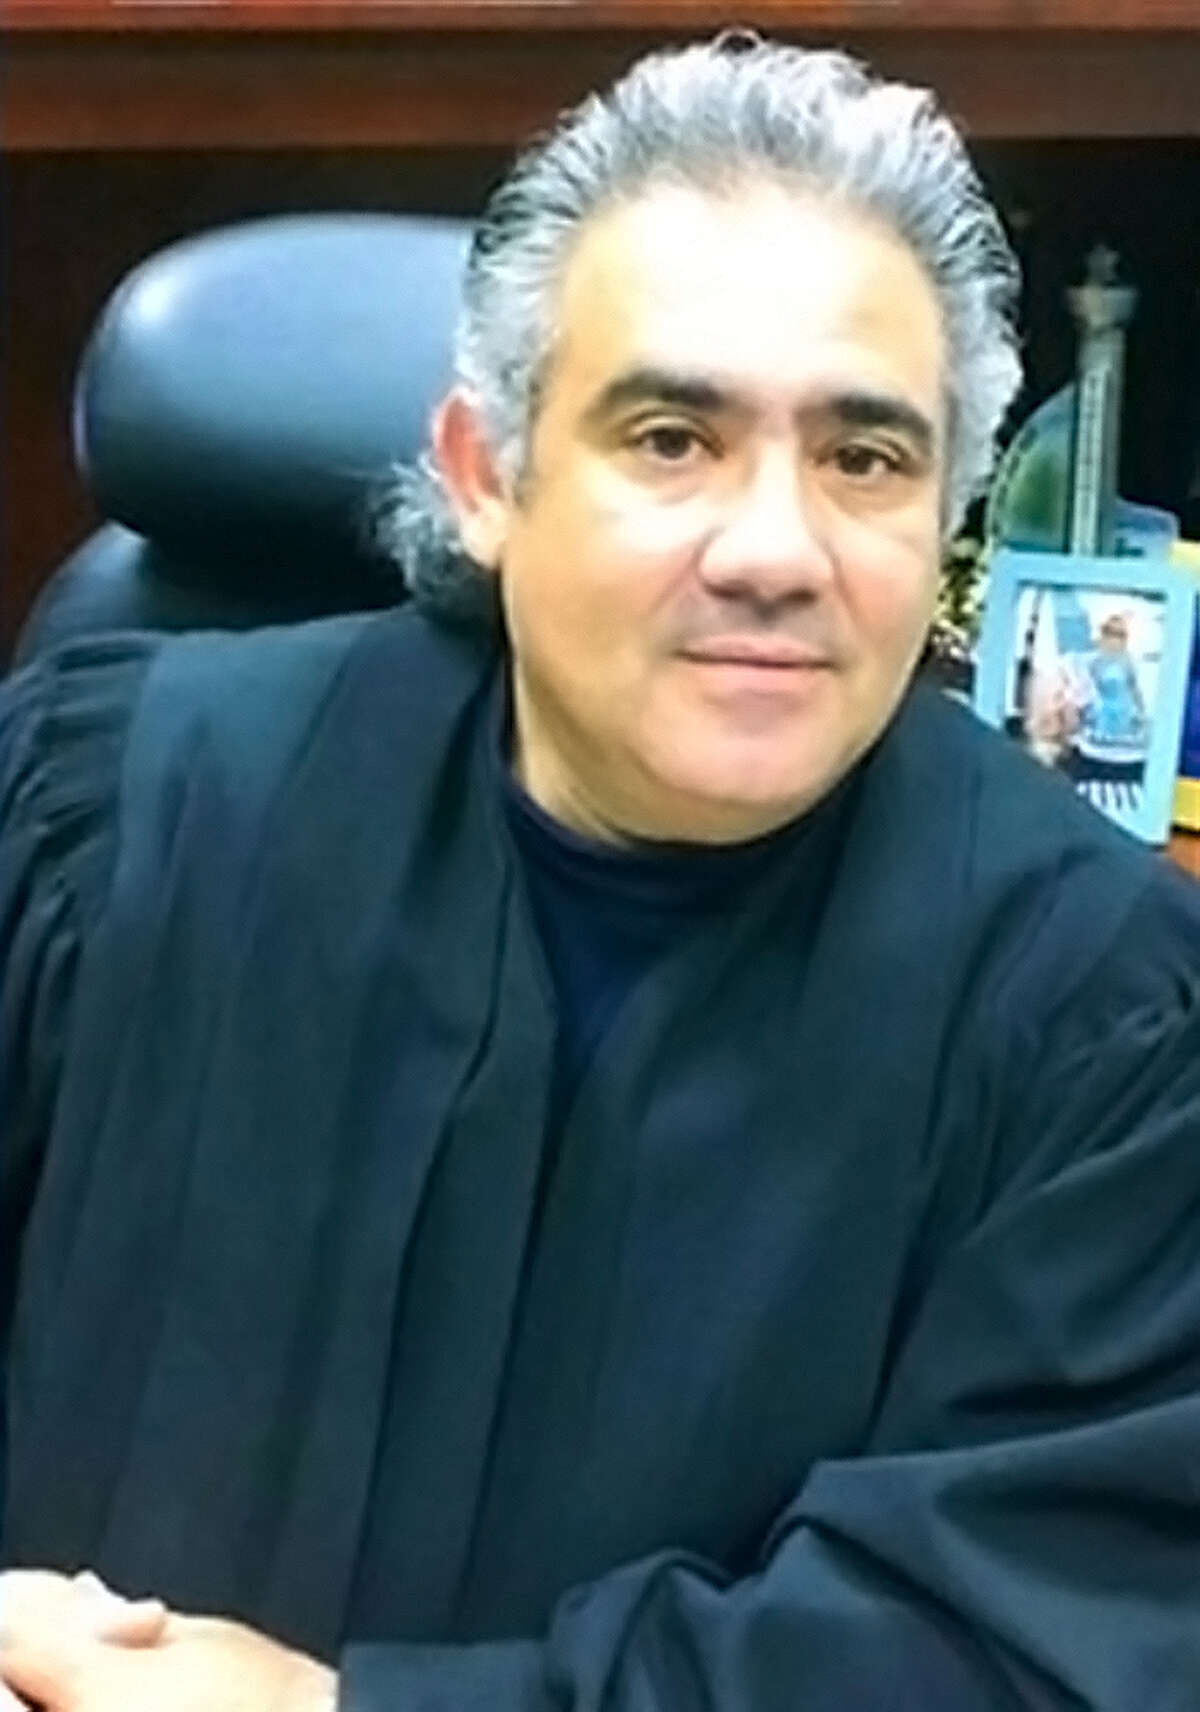 Judge Oscar Kazen